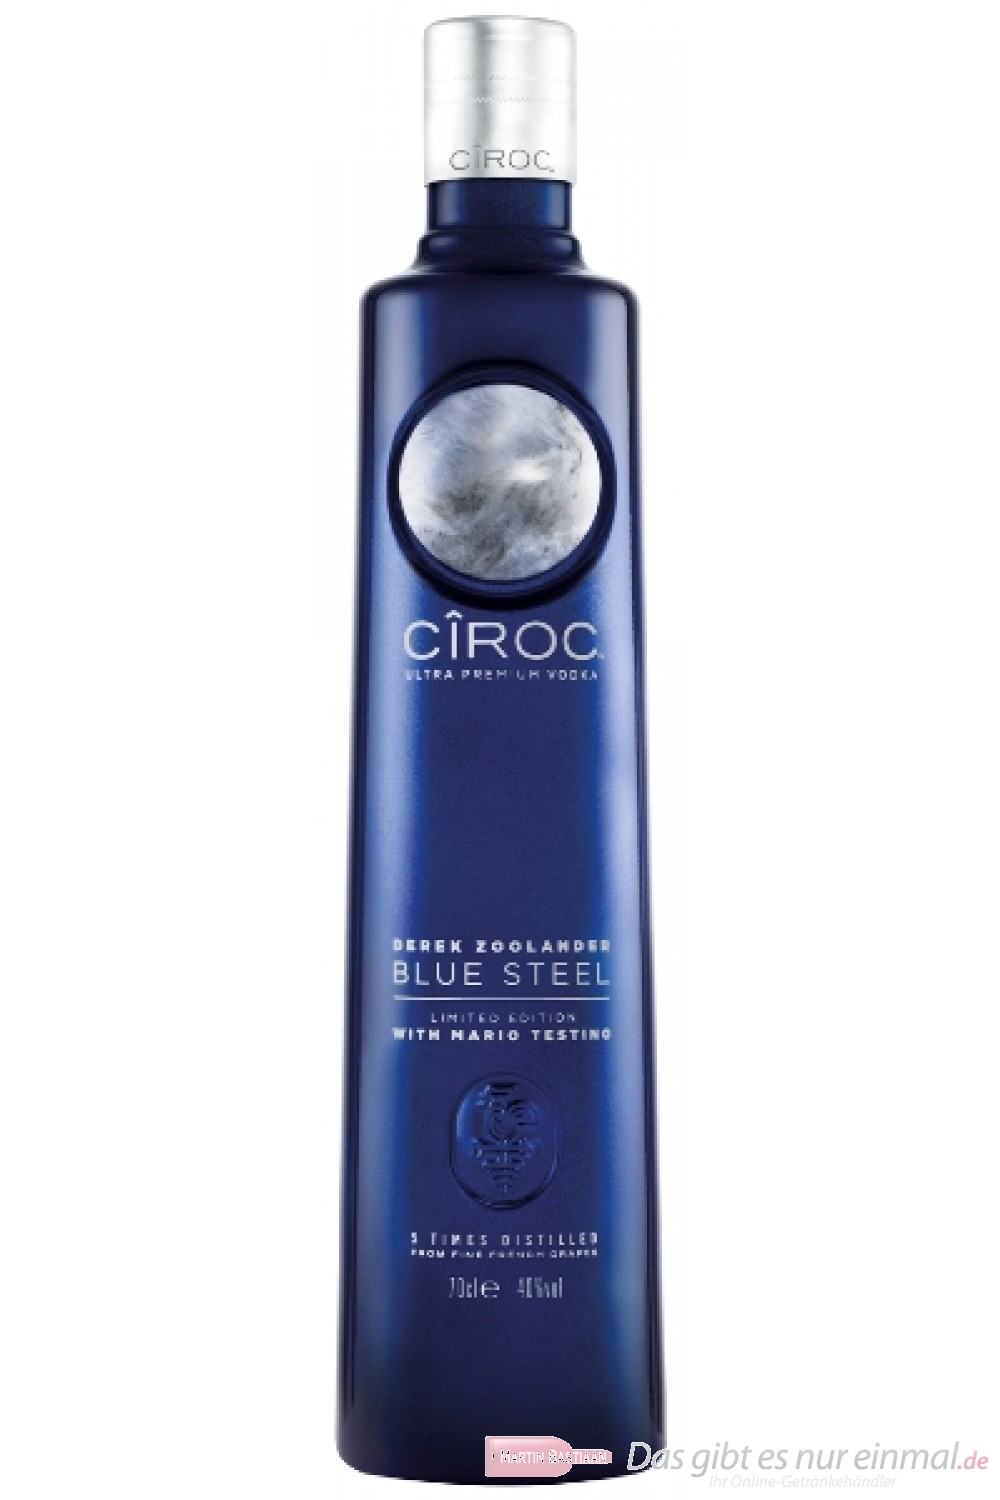 Ciroc Blue Steel Zoolander Limited Edition